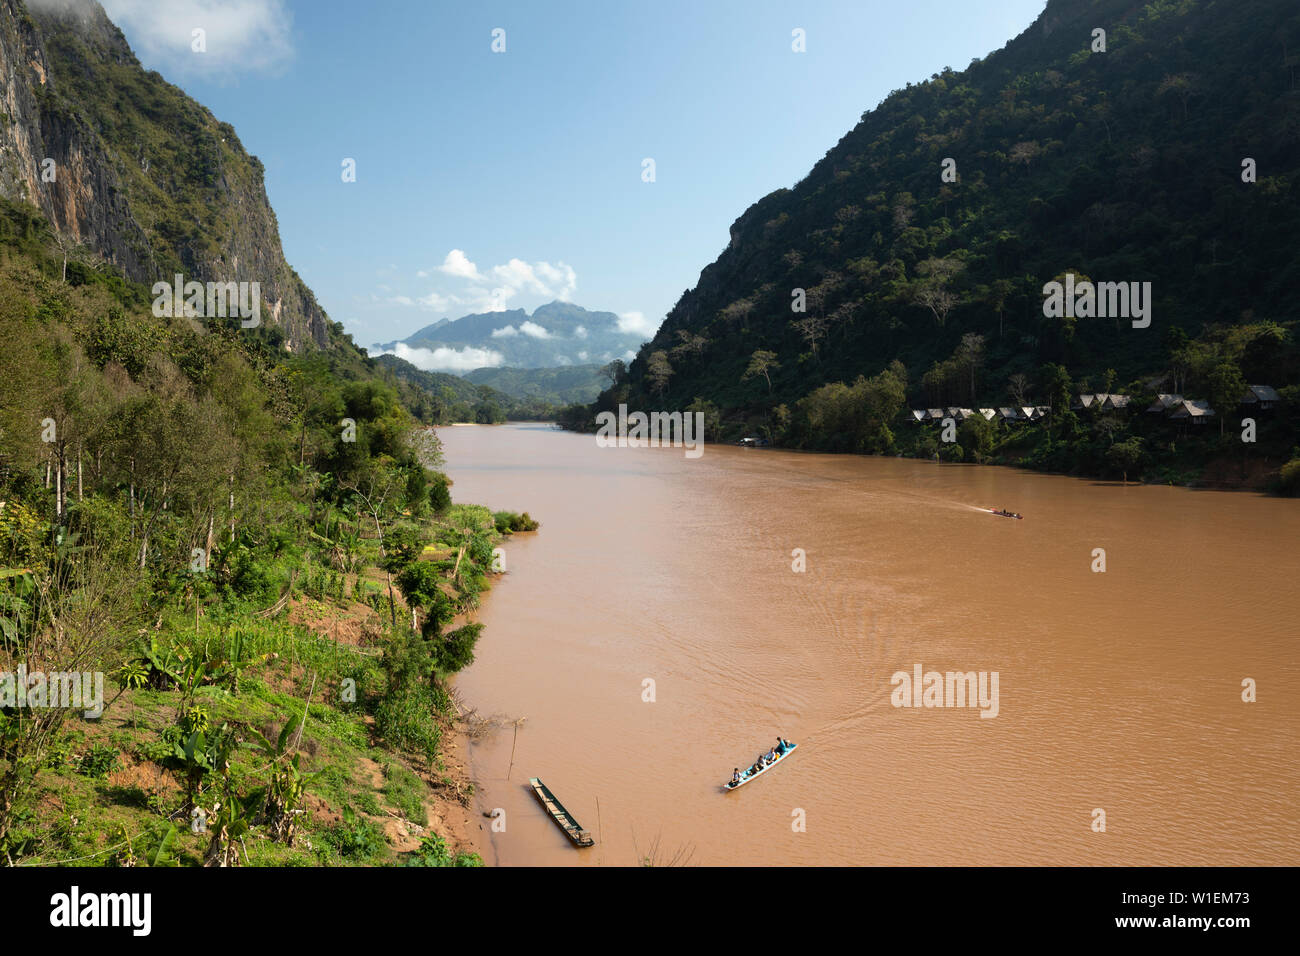 Nam Ou Fluss nach Norden, Nong Khiaw, Muang Ngoi Bezirk, Provinz Luang Prabang Laos, Laos, Indochina, Südostasien, Asien Stockfoto